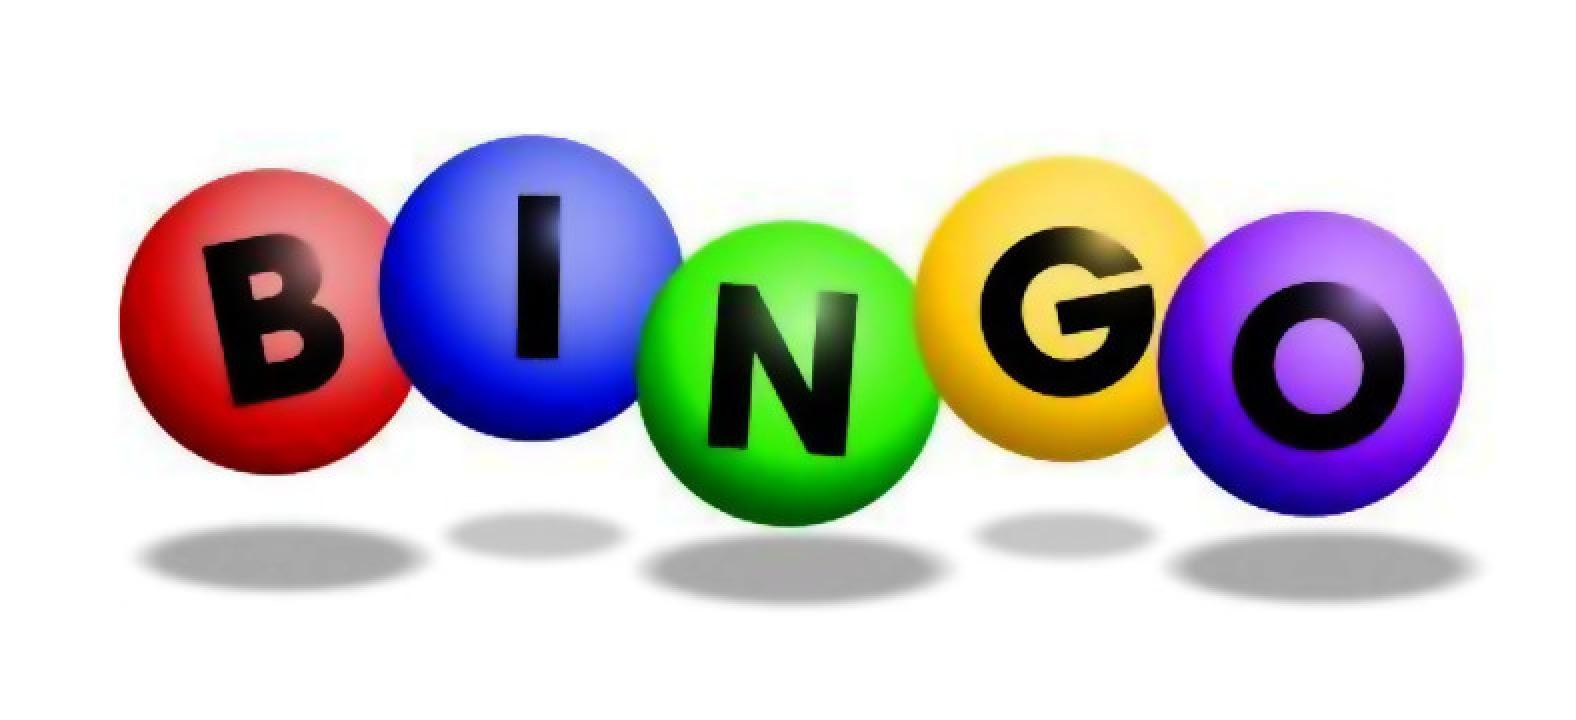 Bingo clipart green, Bingo green Transparent FREE for.